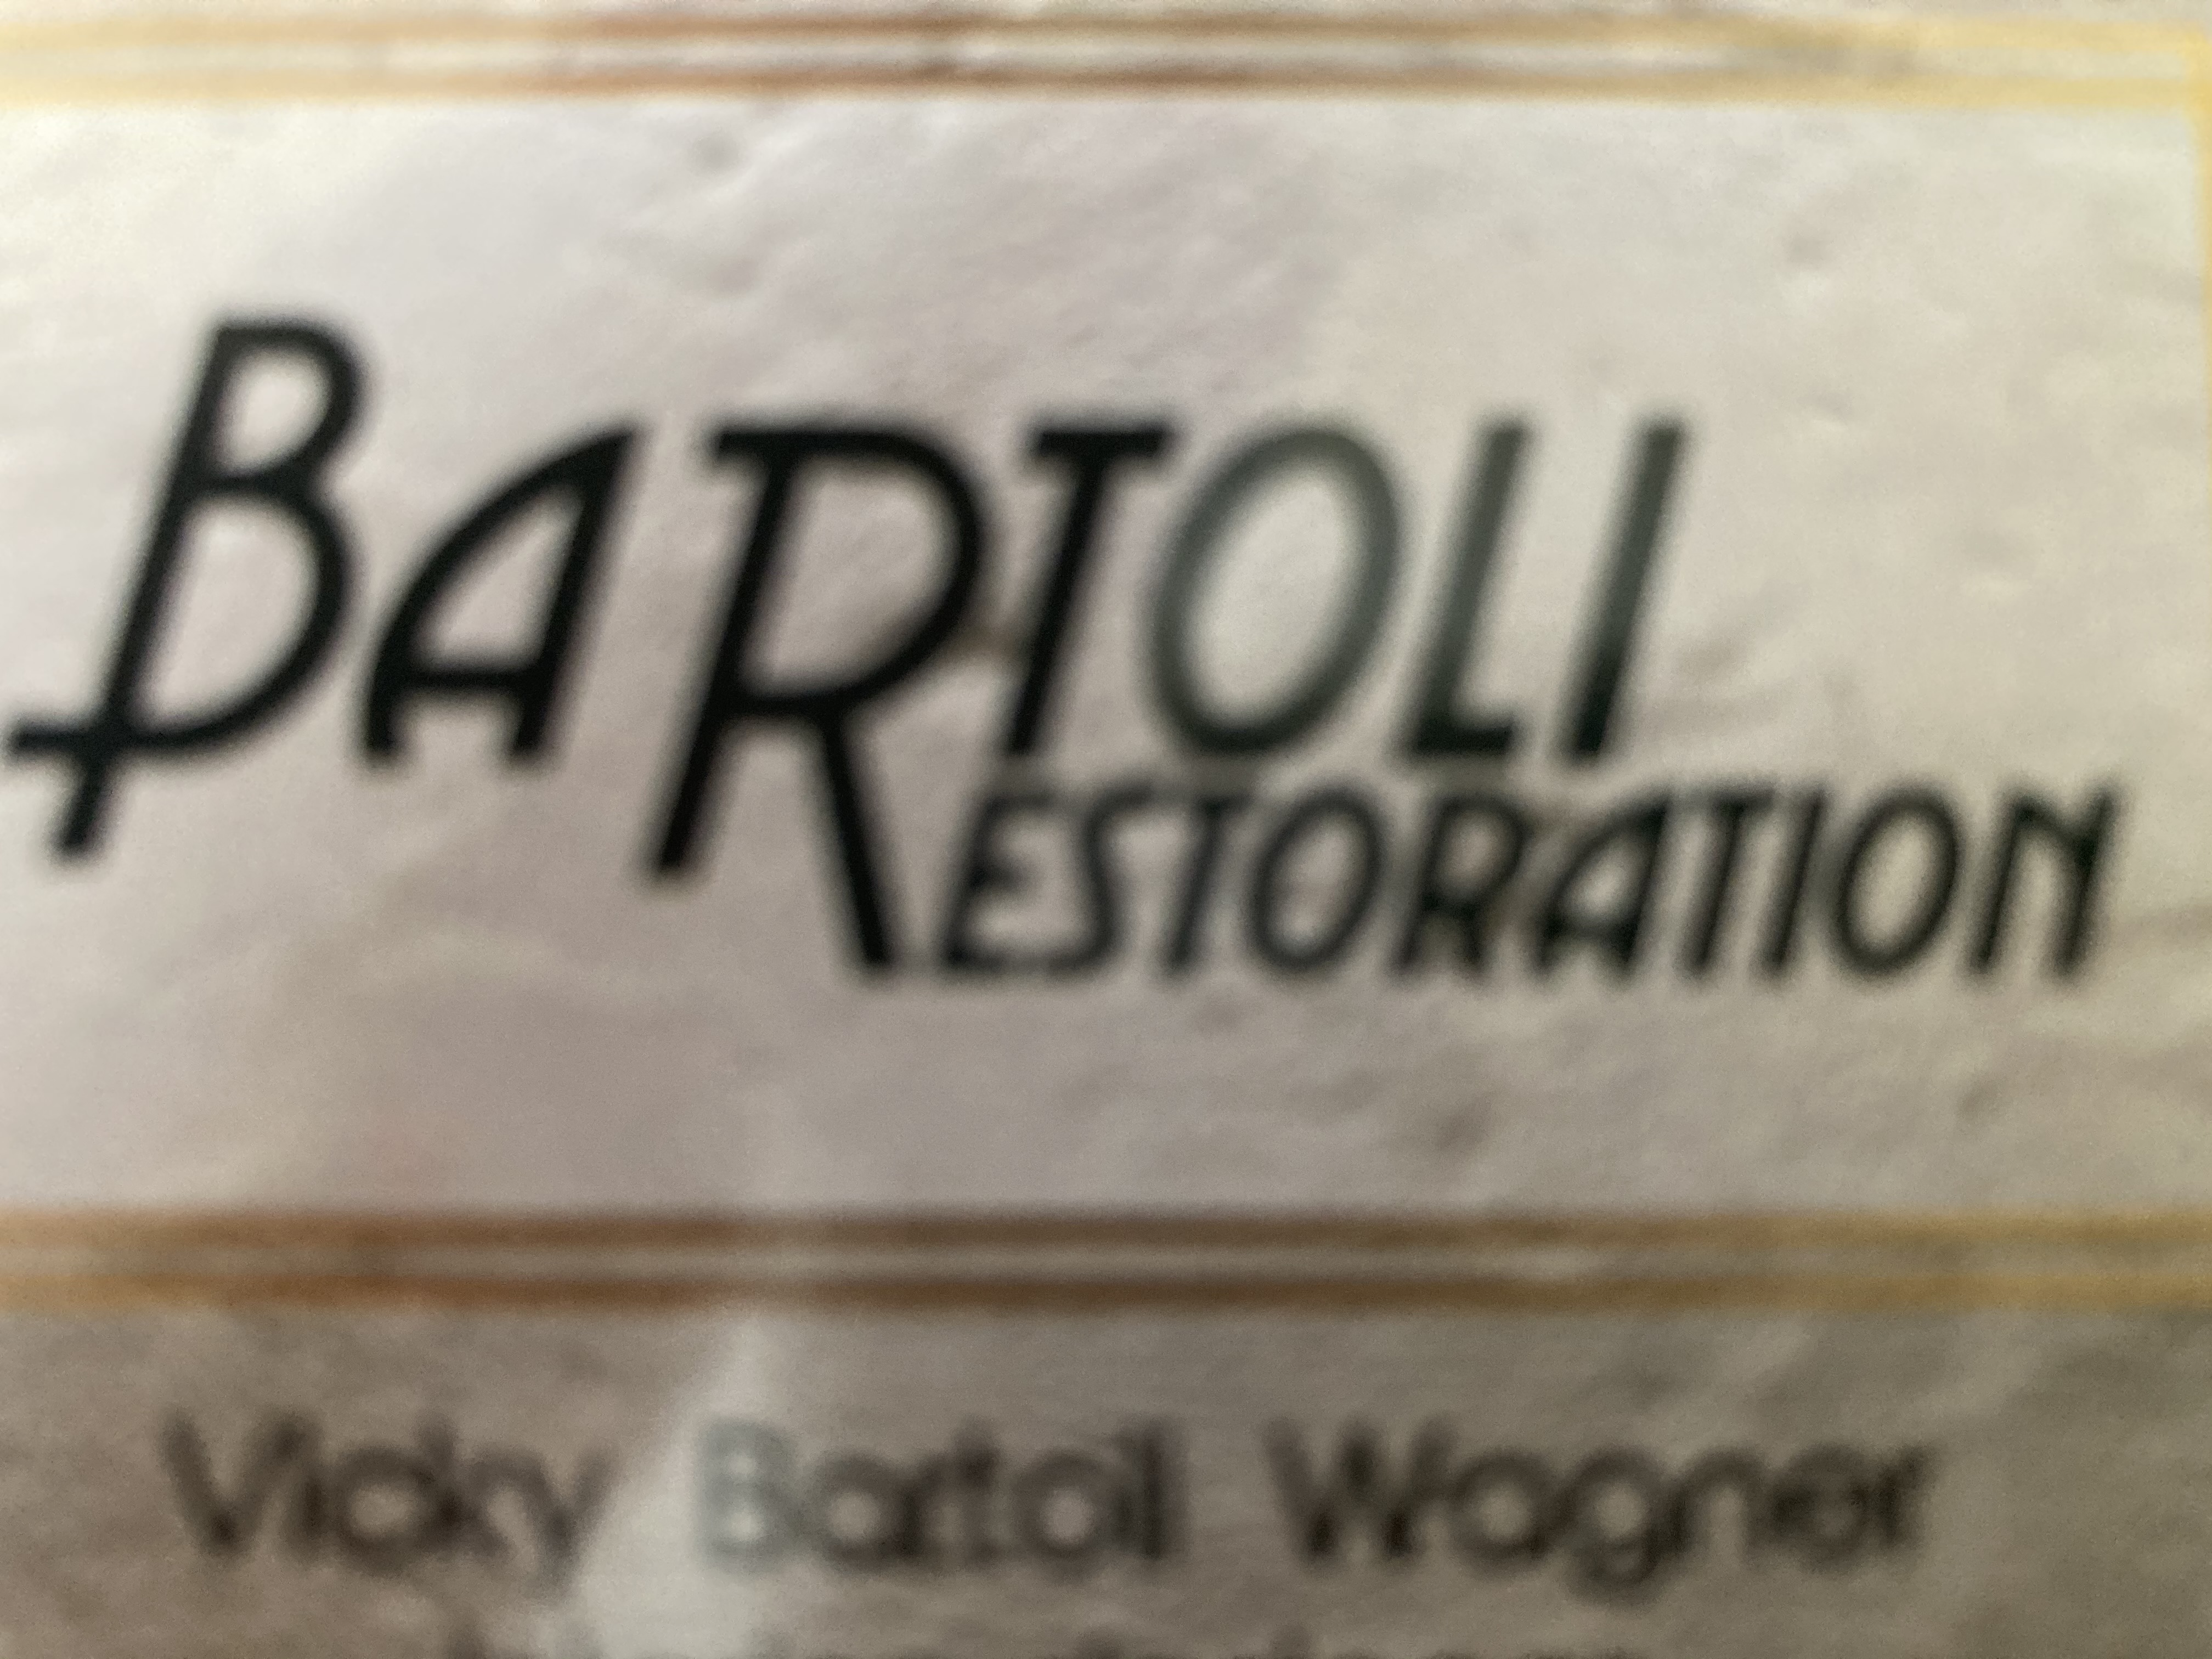 Bartoli Restoration Logo